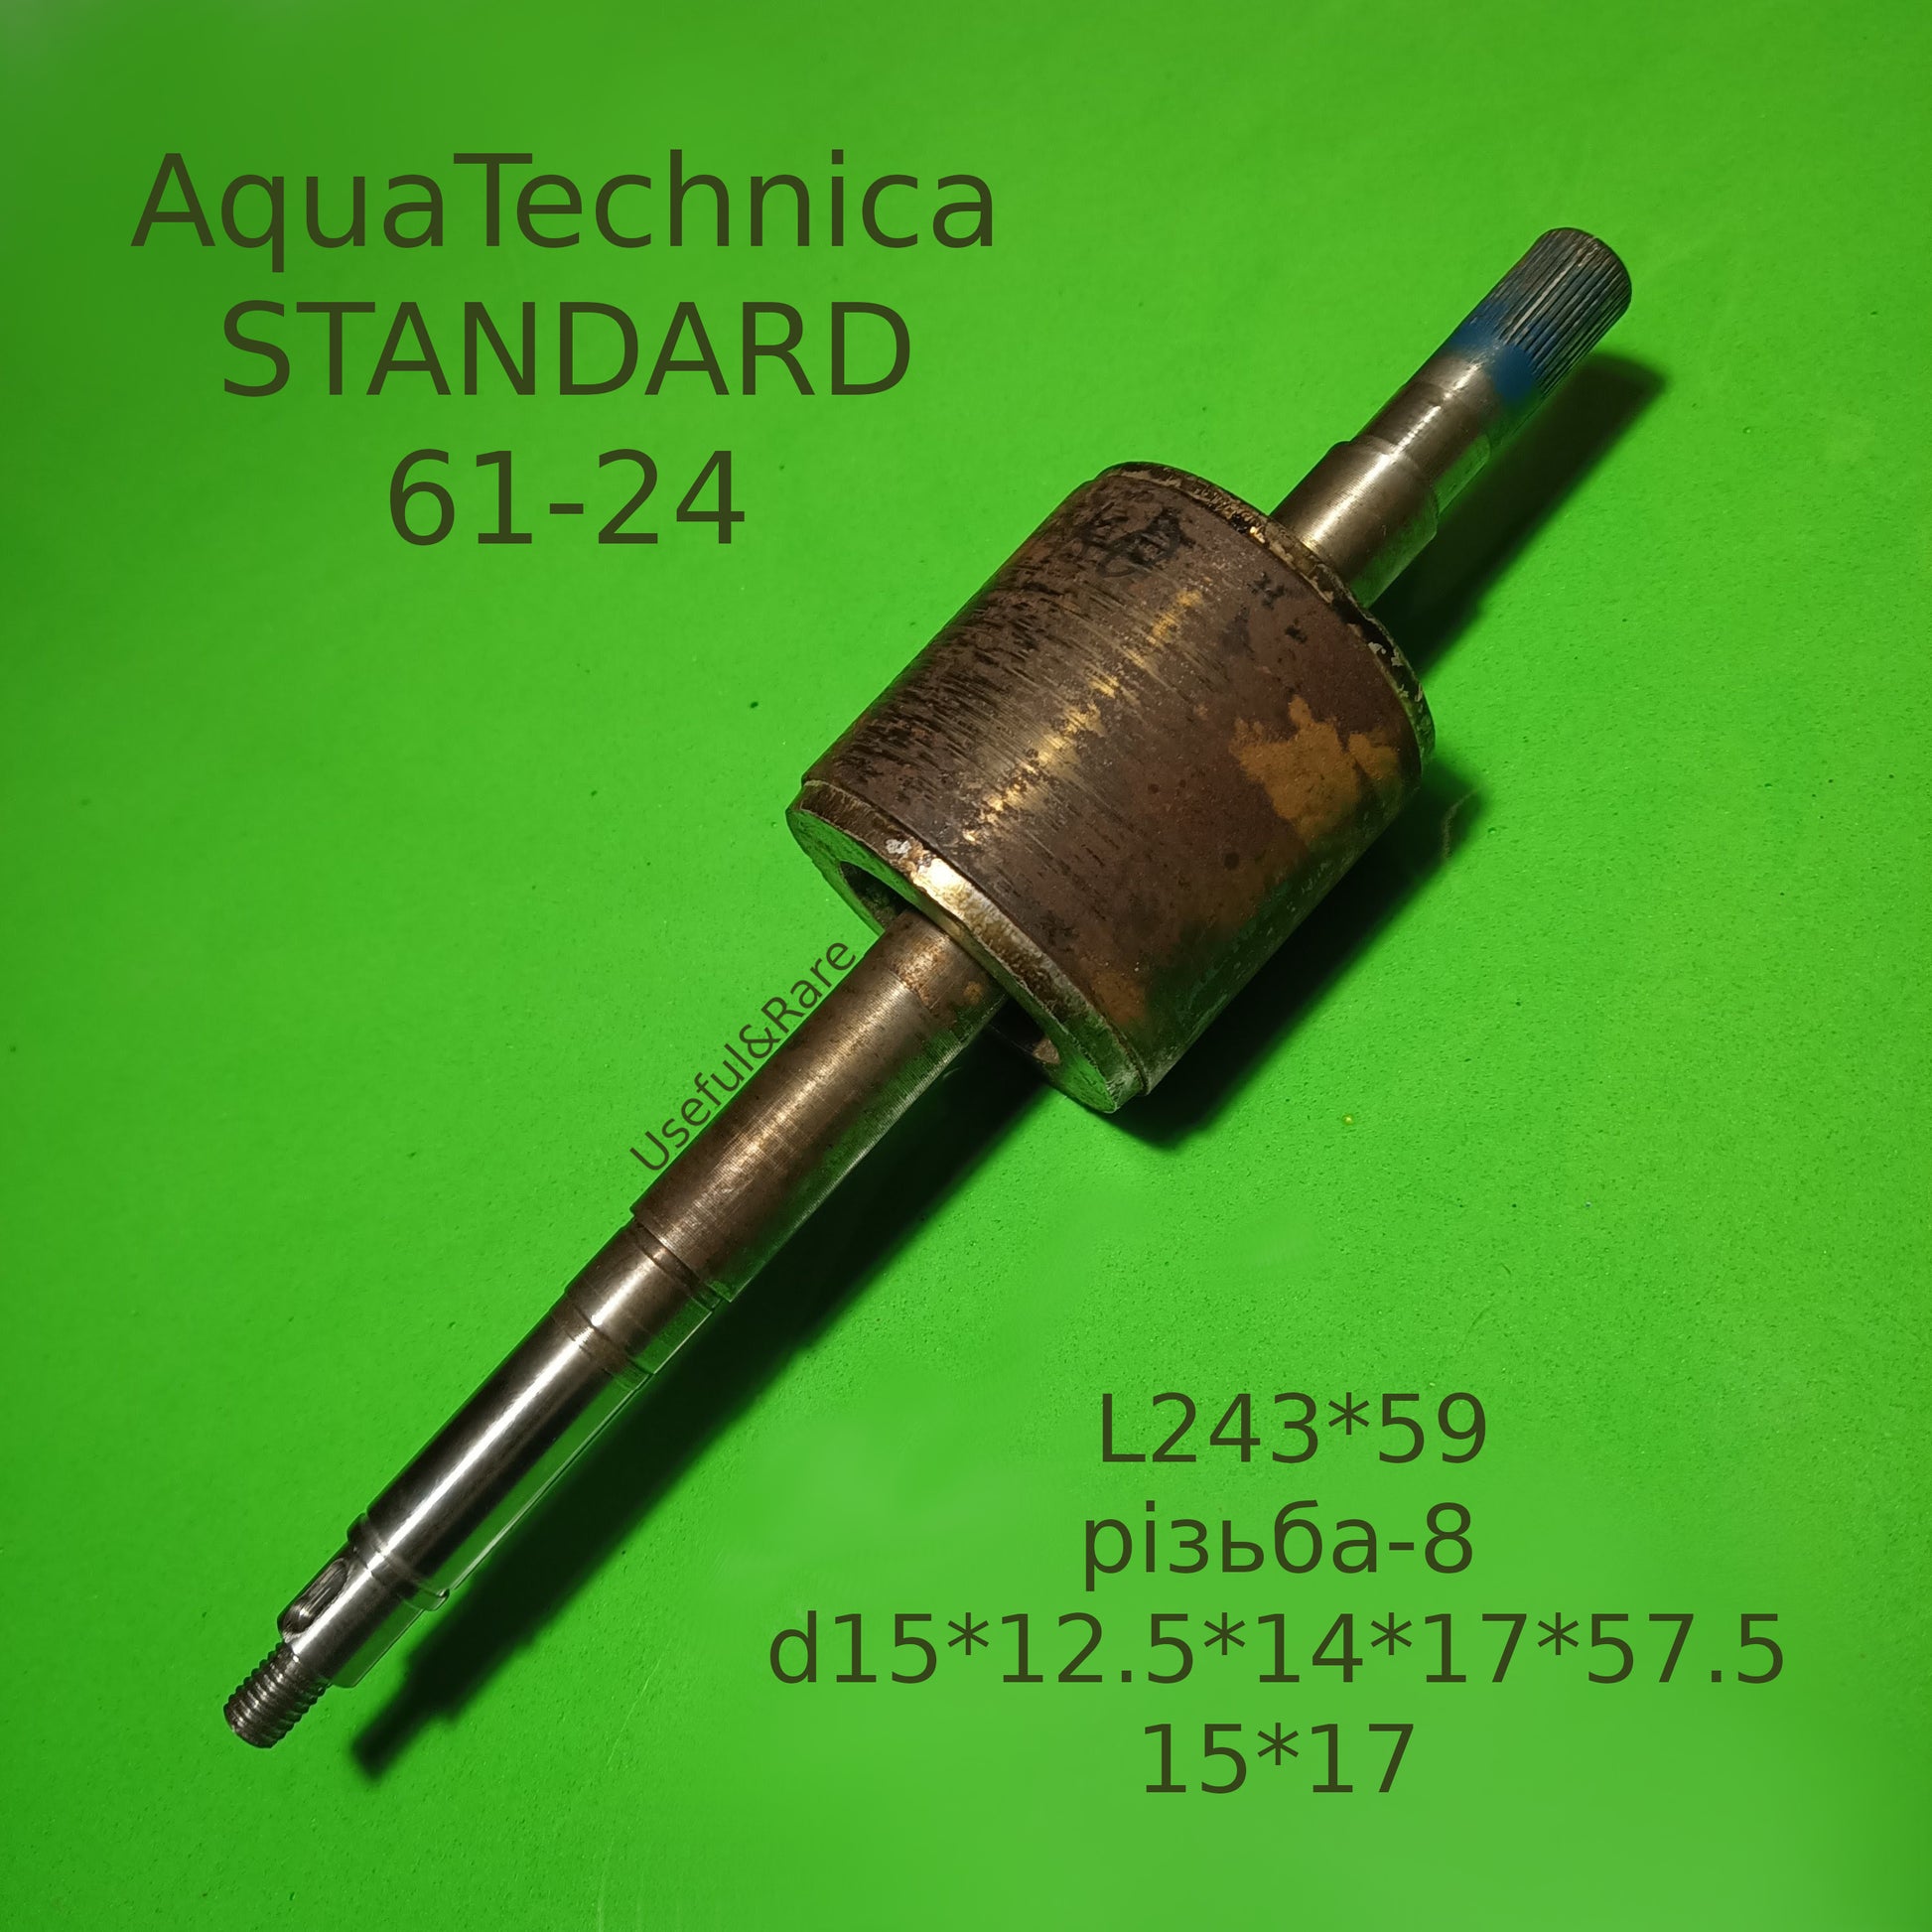 AquaTechnica STANDARD 61-24  L243*59-різьба-8*15*12.5*14*17*57.5 15*17